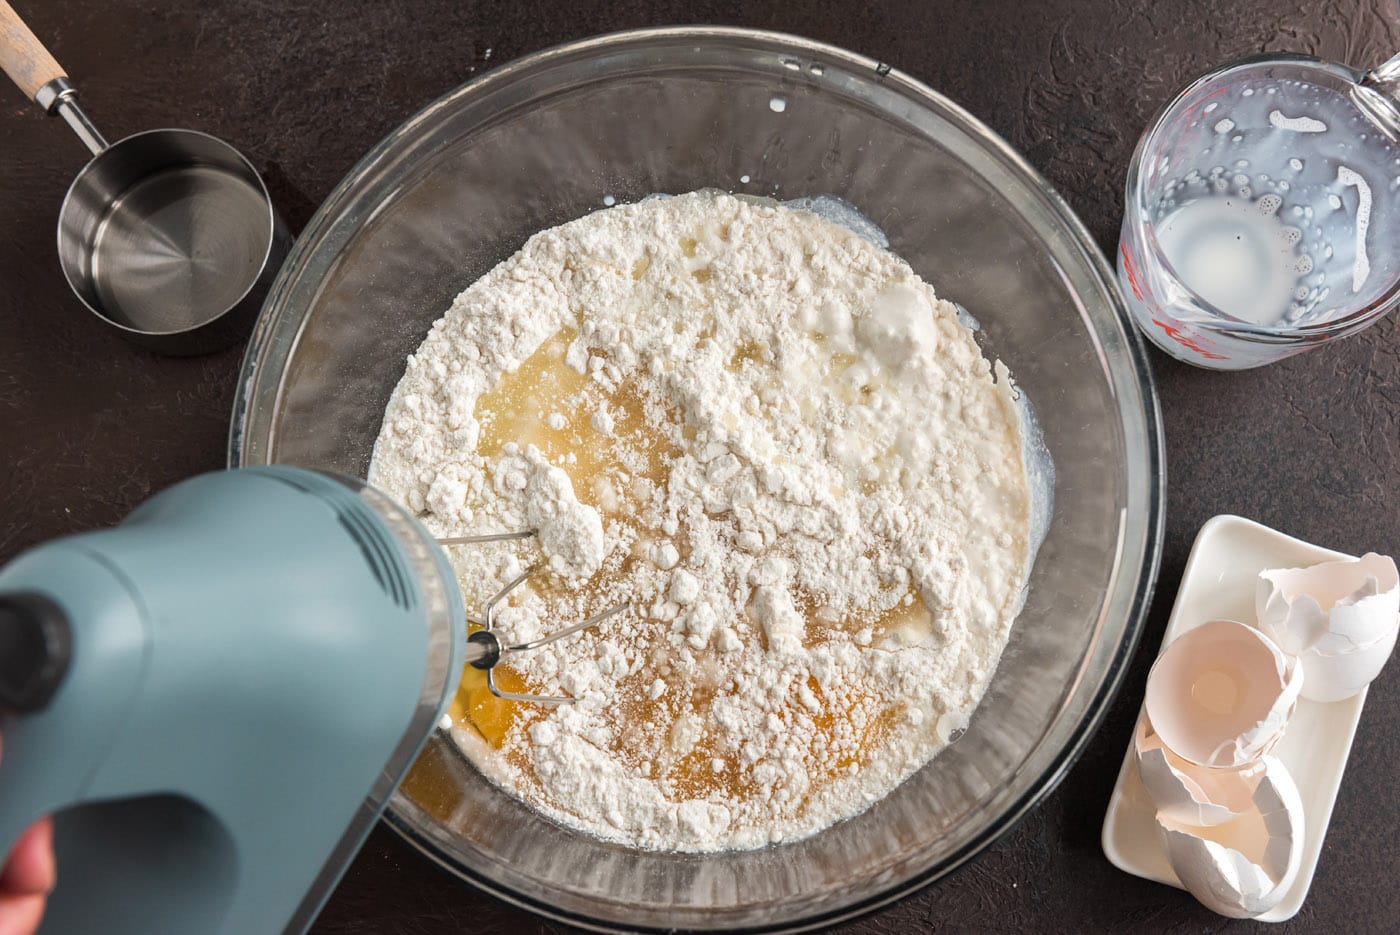 beating cake batter ingredients in a mixing bowl